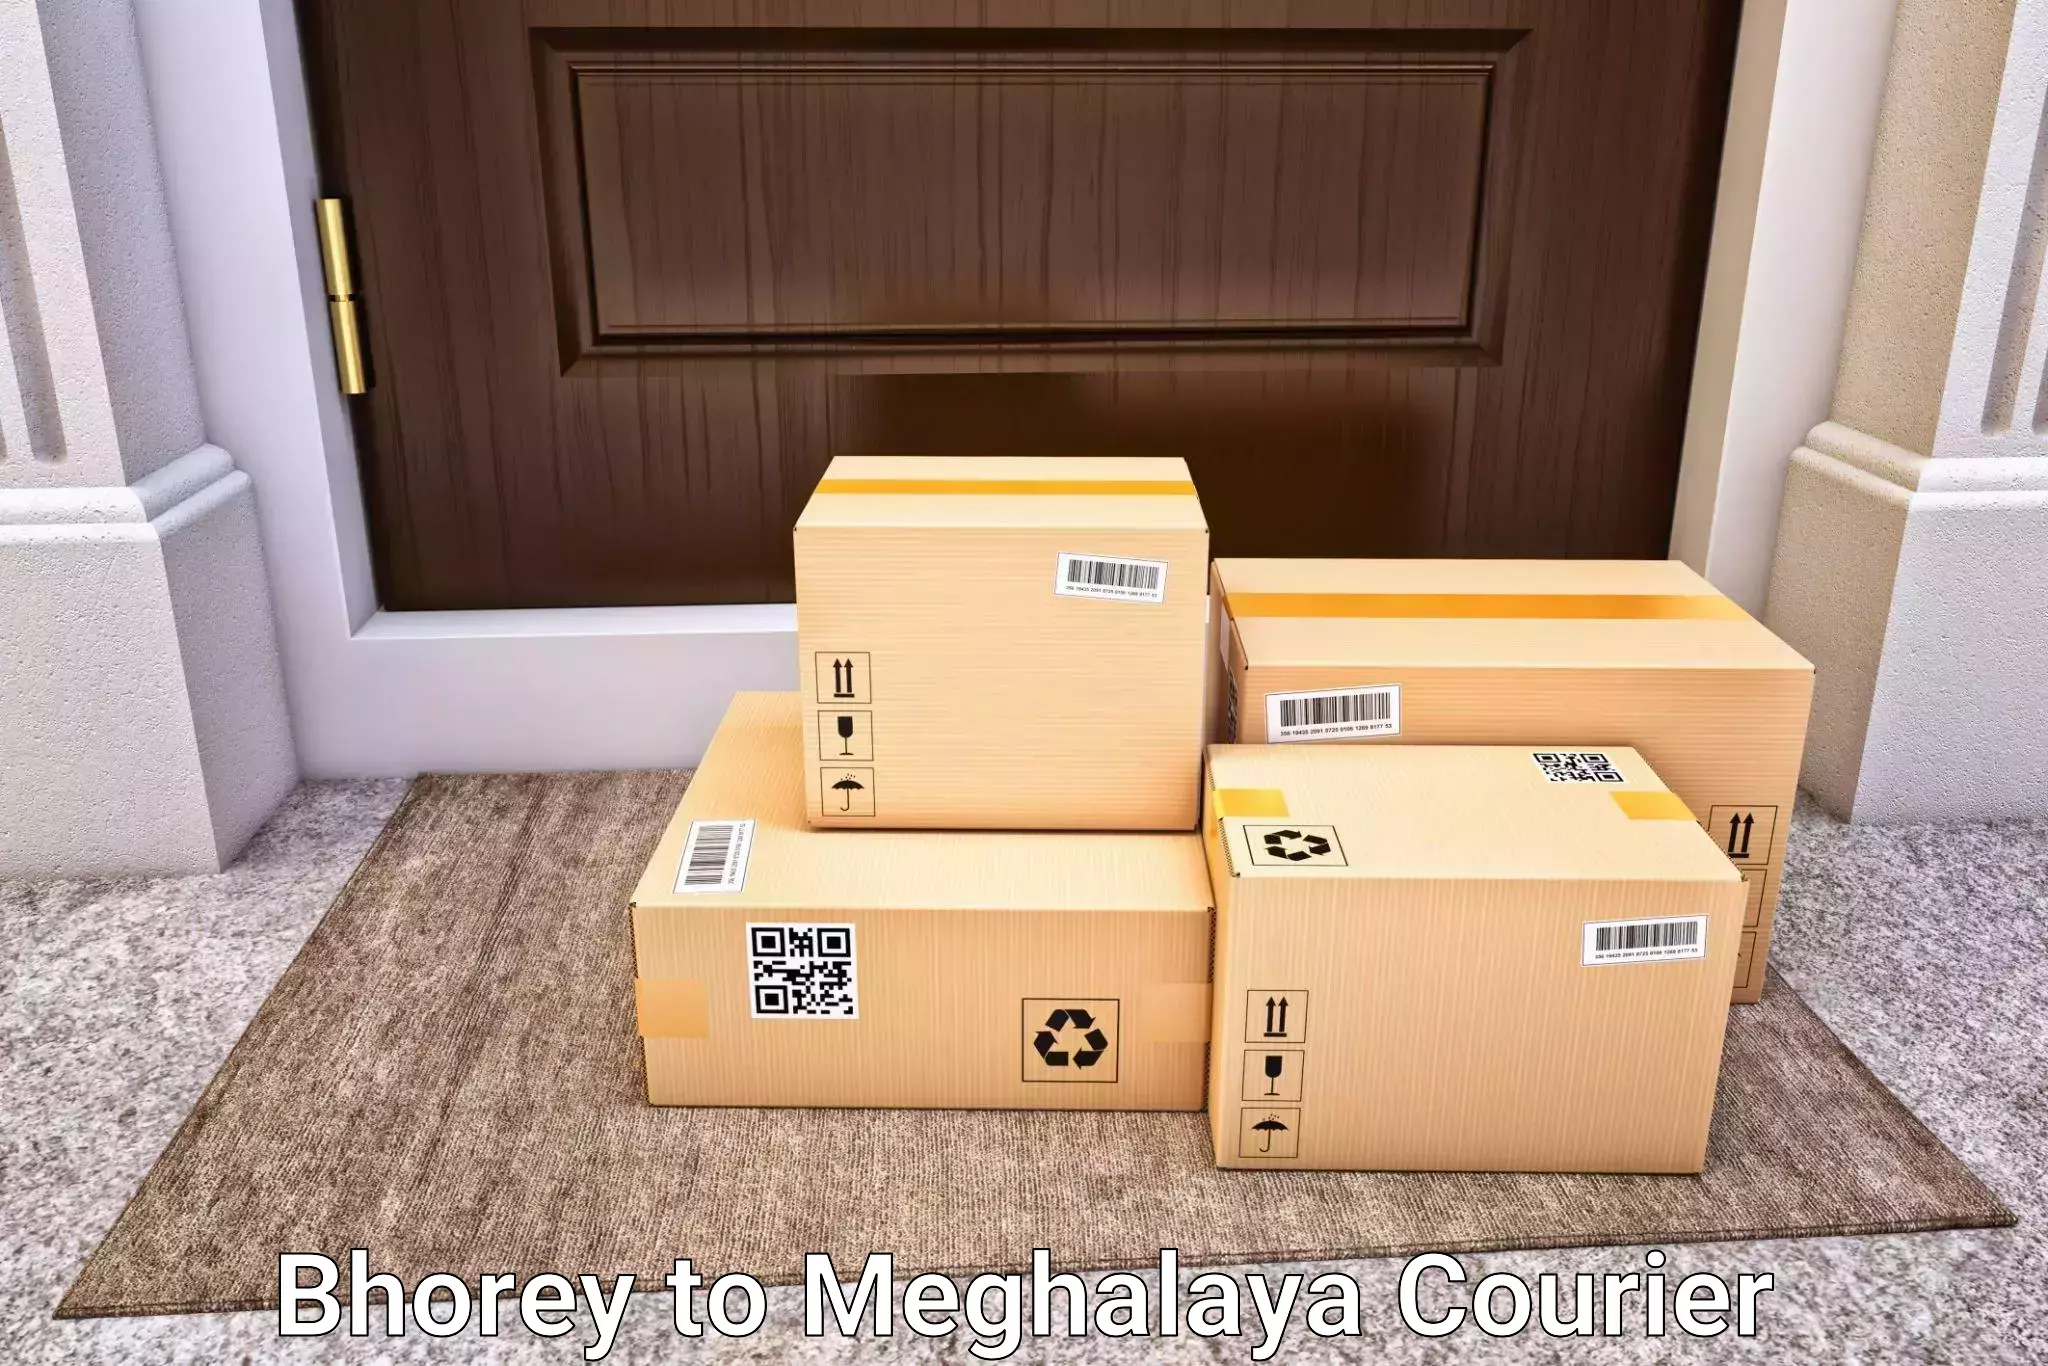 Urgent luggage shipment in Bhorey to Tura